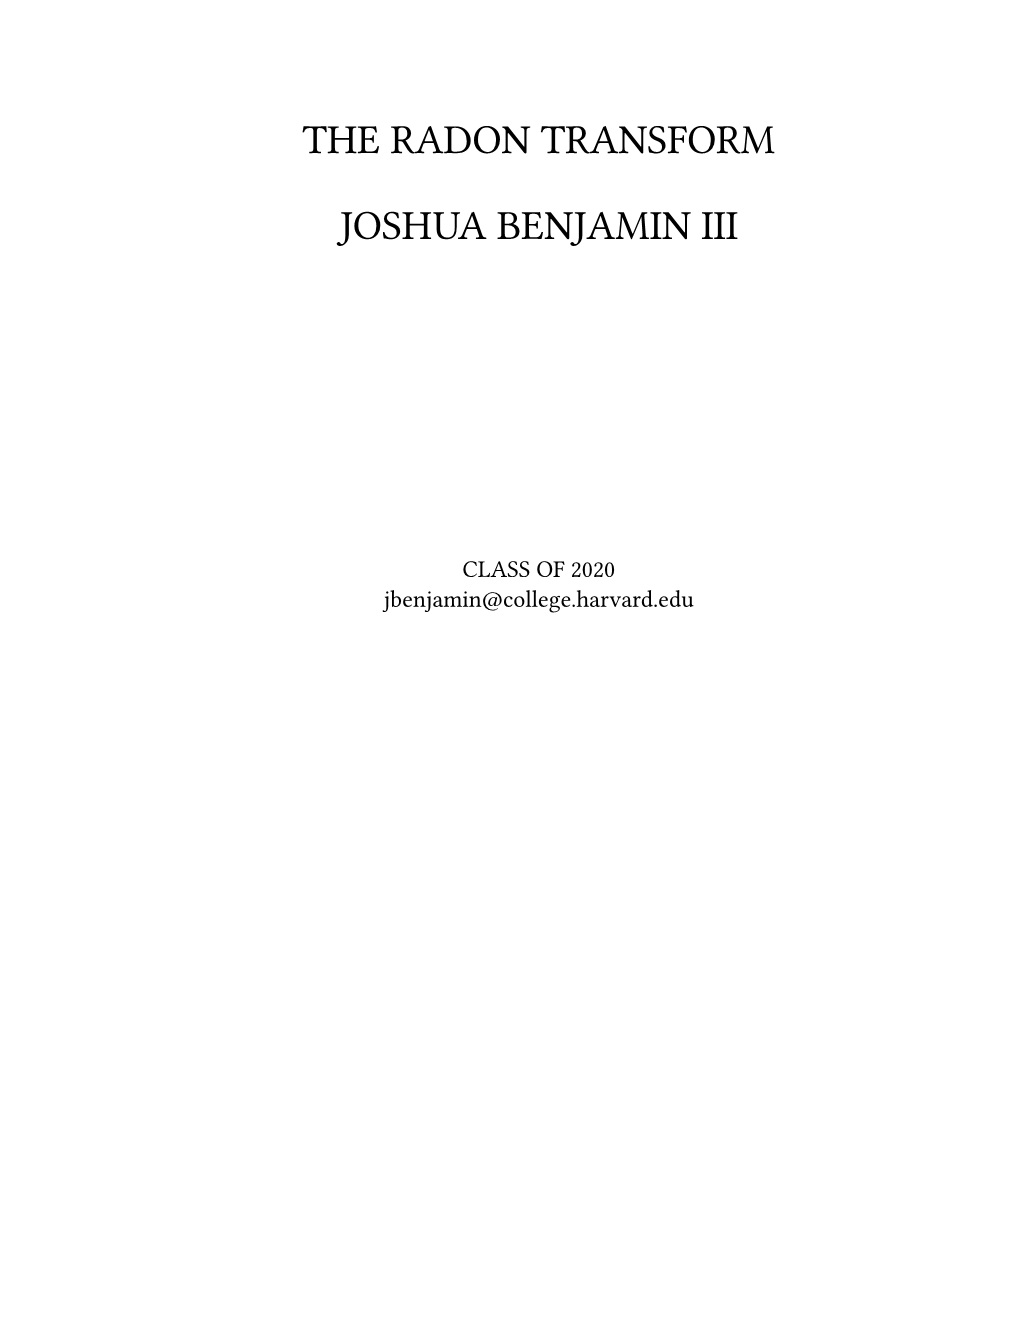 The Radon Transform Joshua Benjamin